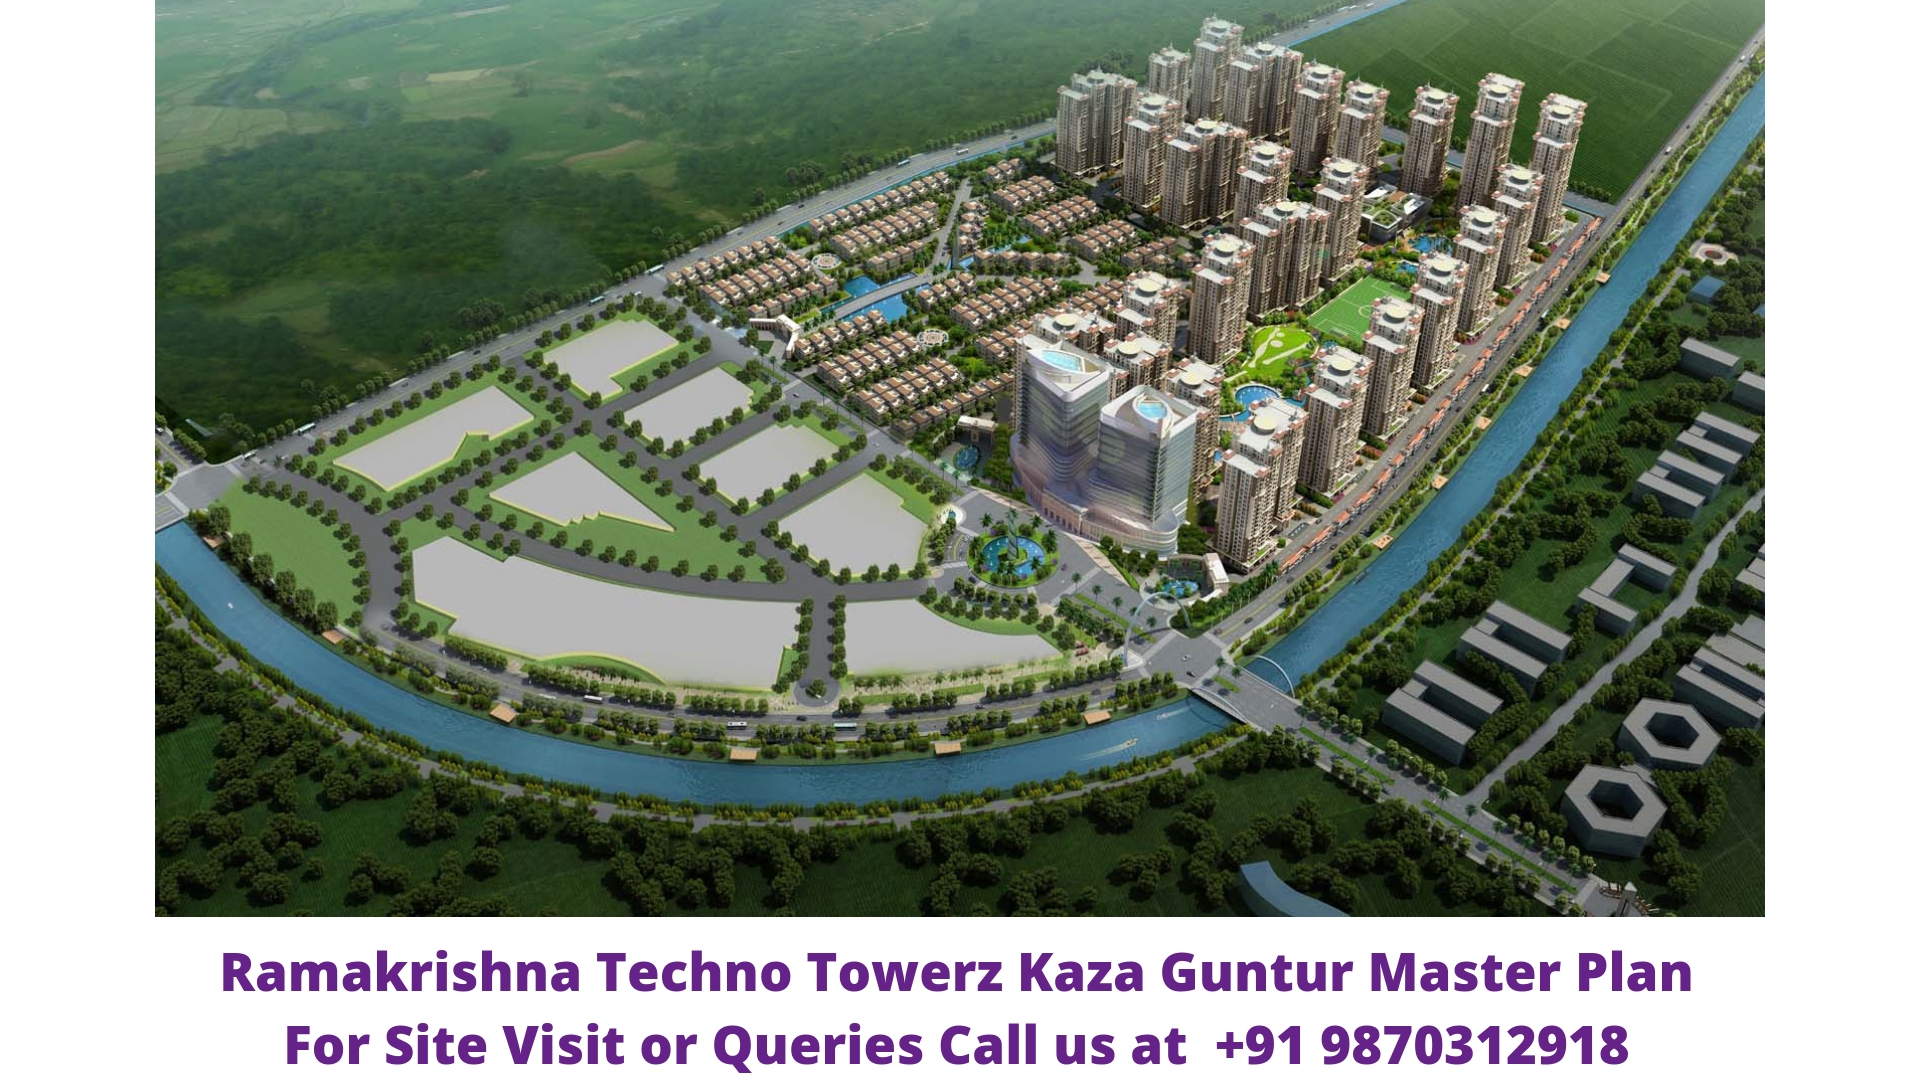 Ramakrishna Techno Towerz Kaza Guntur